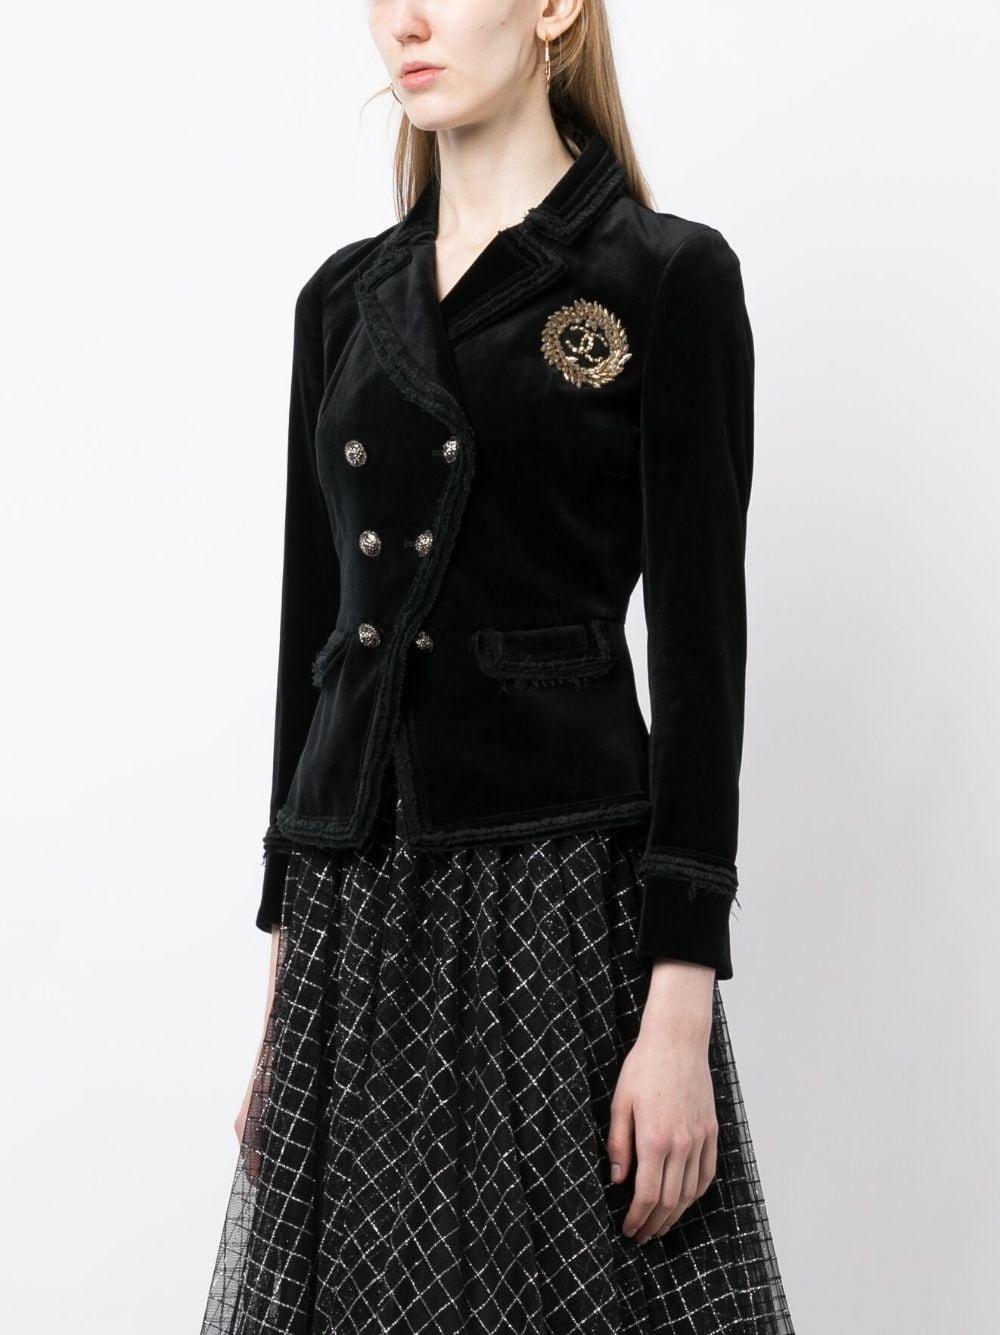 Chanel Claudia Schiffer CC Patch Black Jacket 1